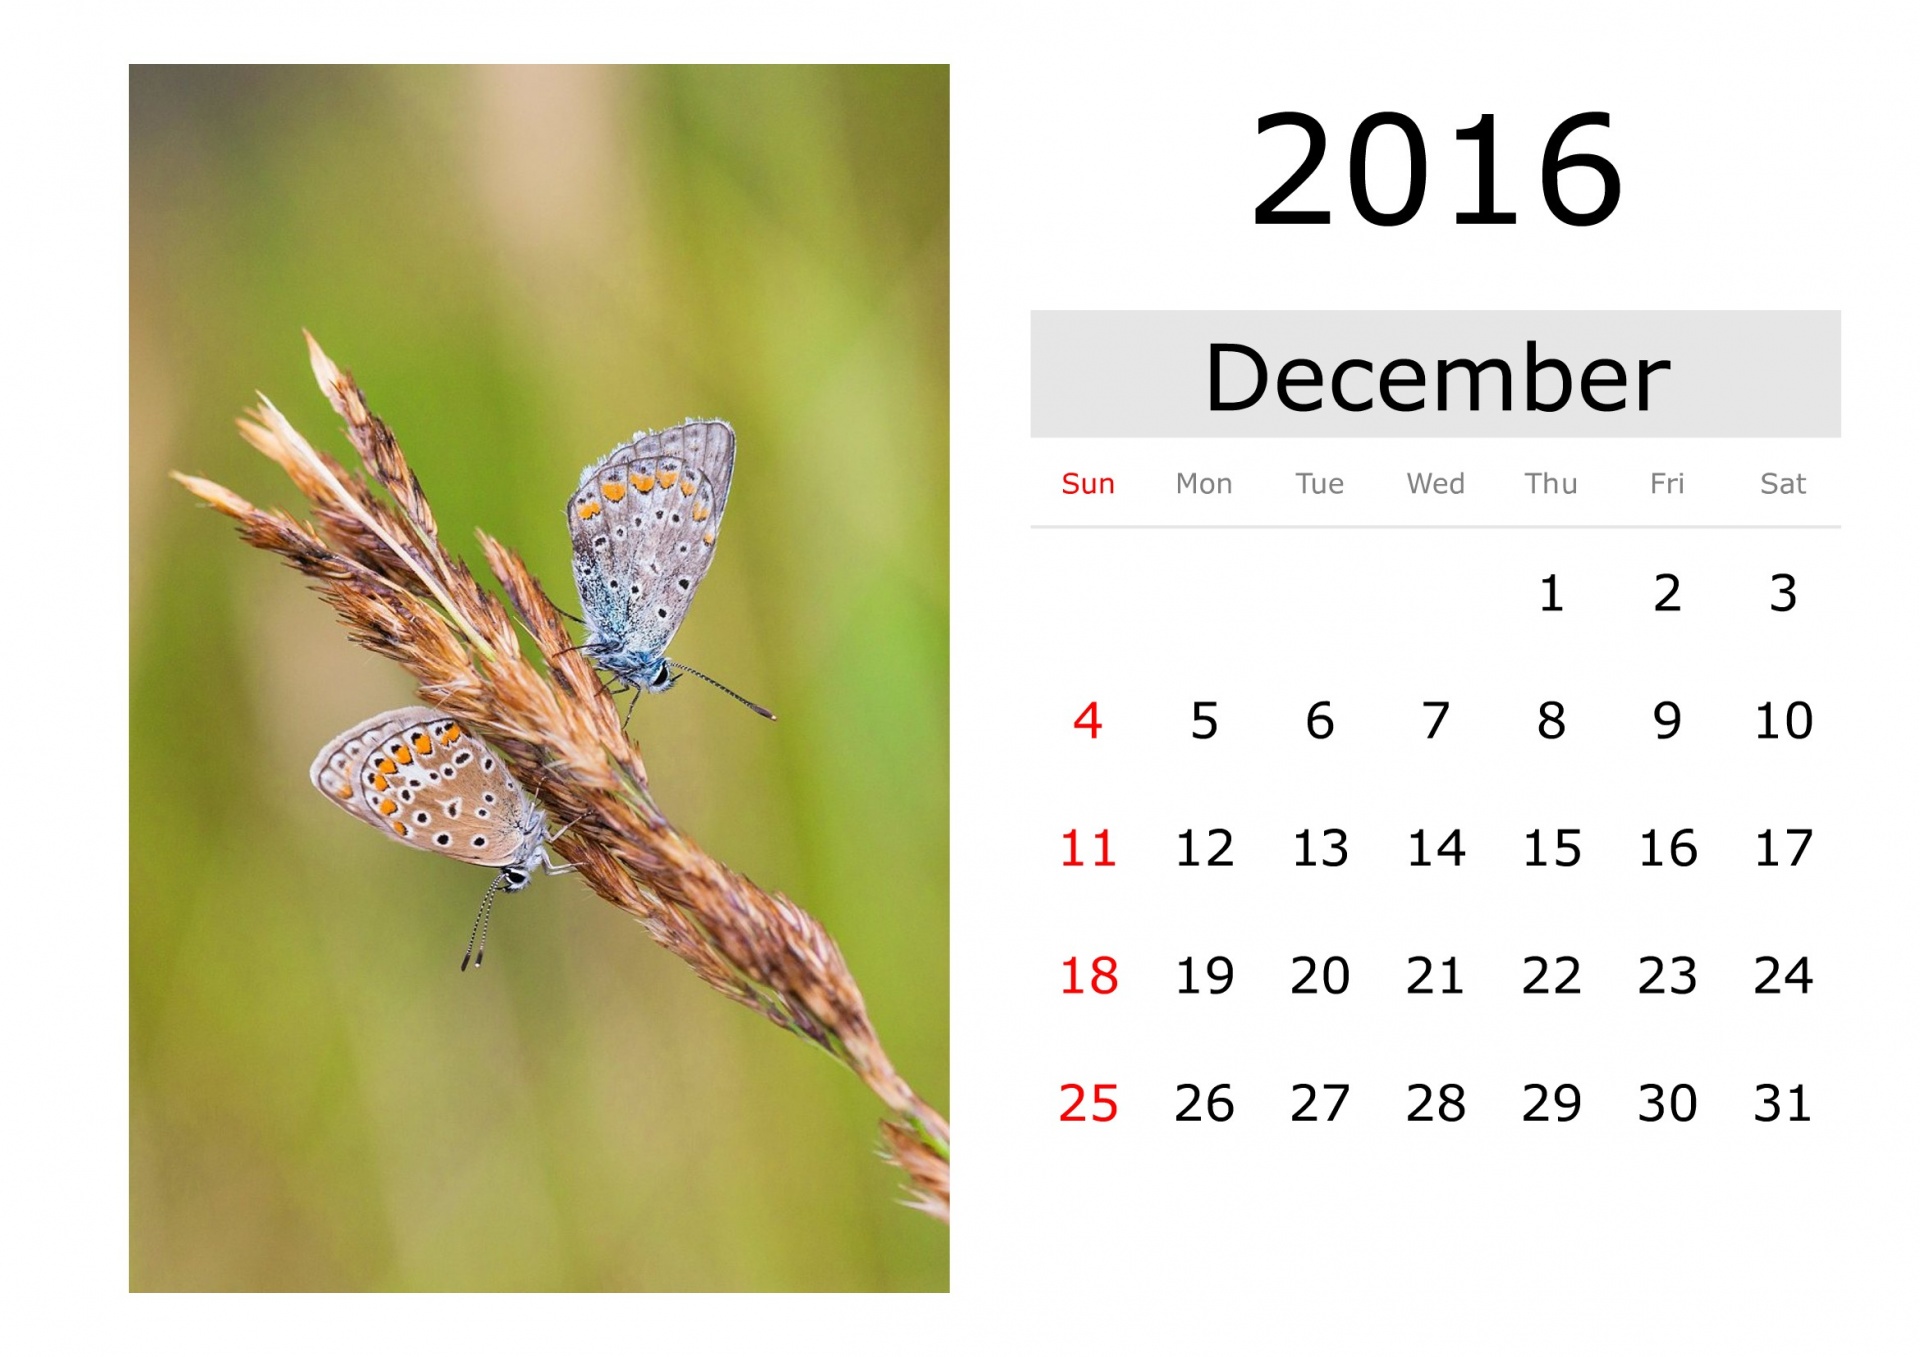 Calendar - December 2016 (English)